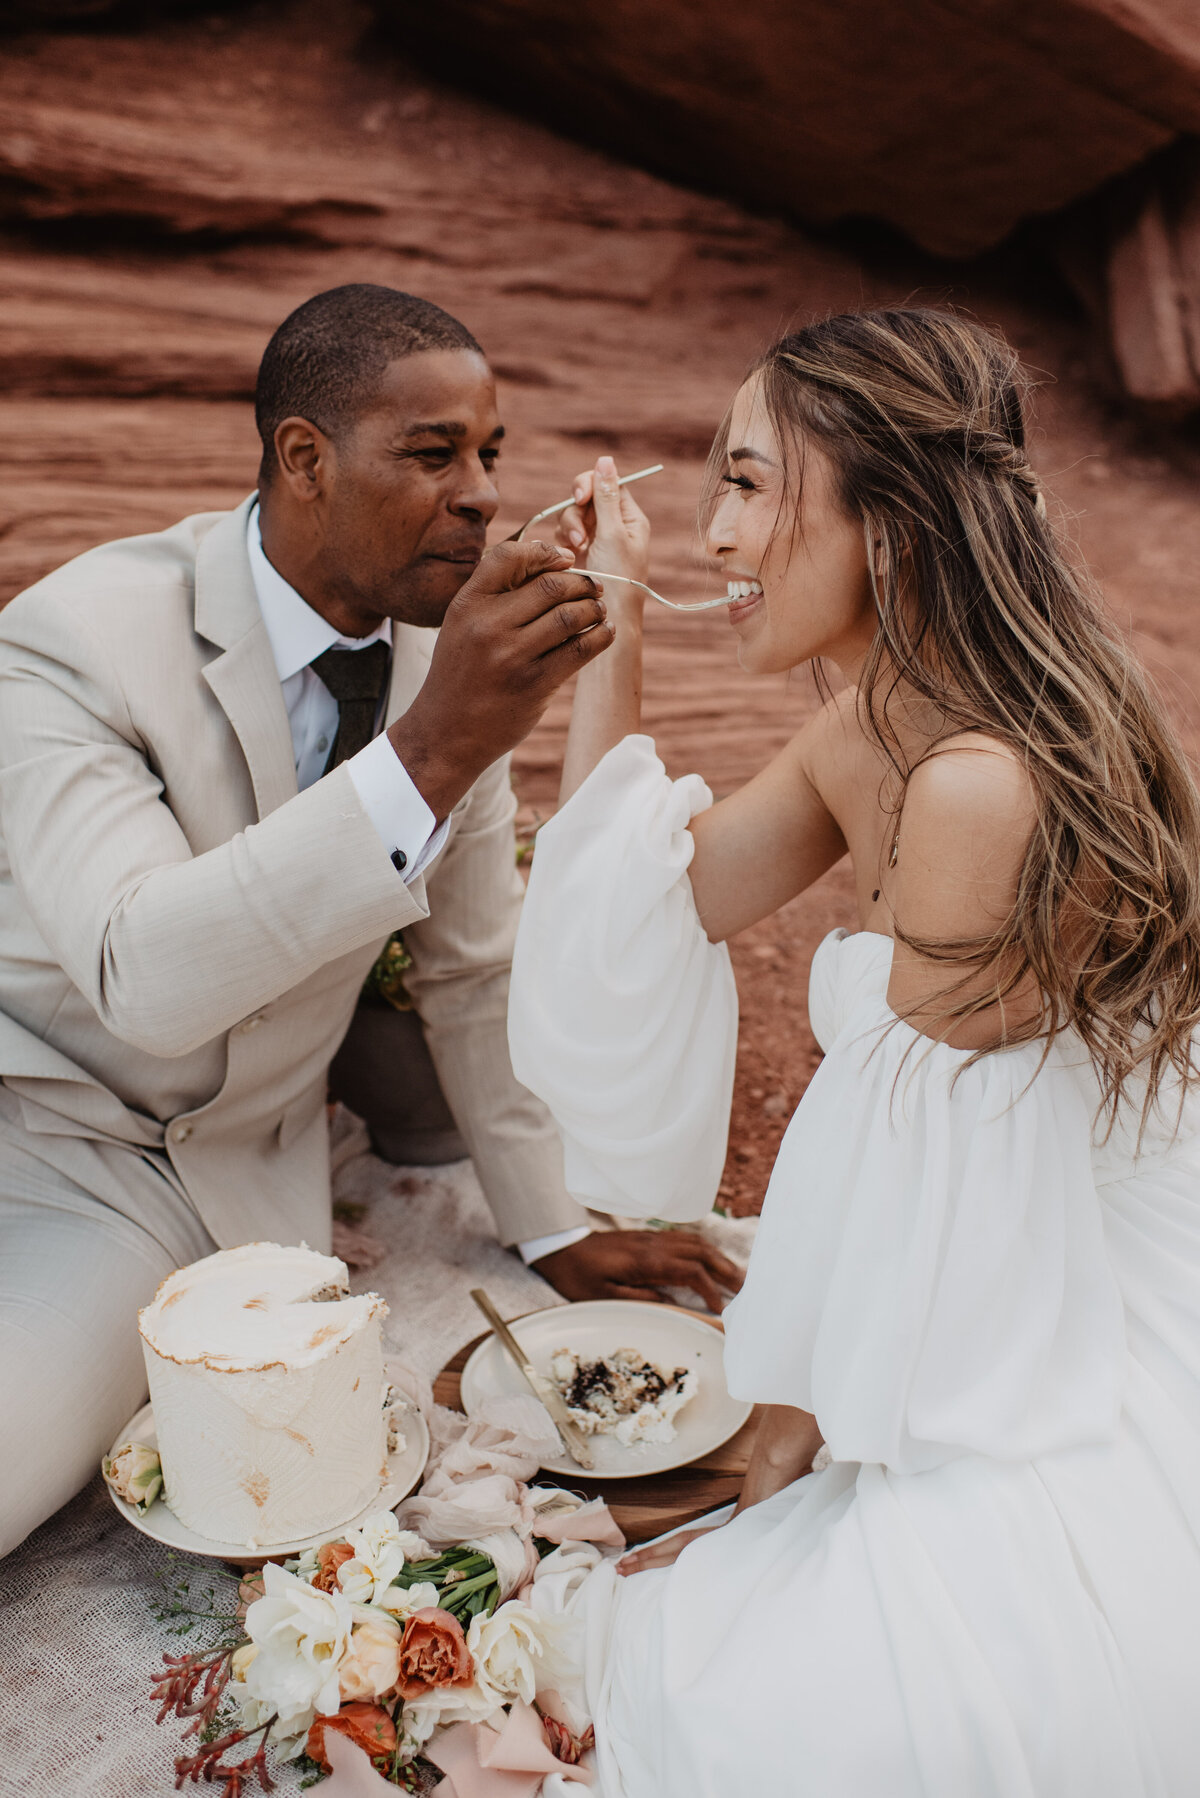 Utah Elopement Photographer captures couple eating cake